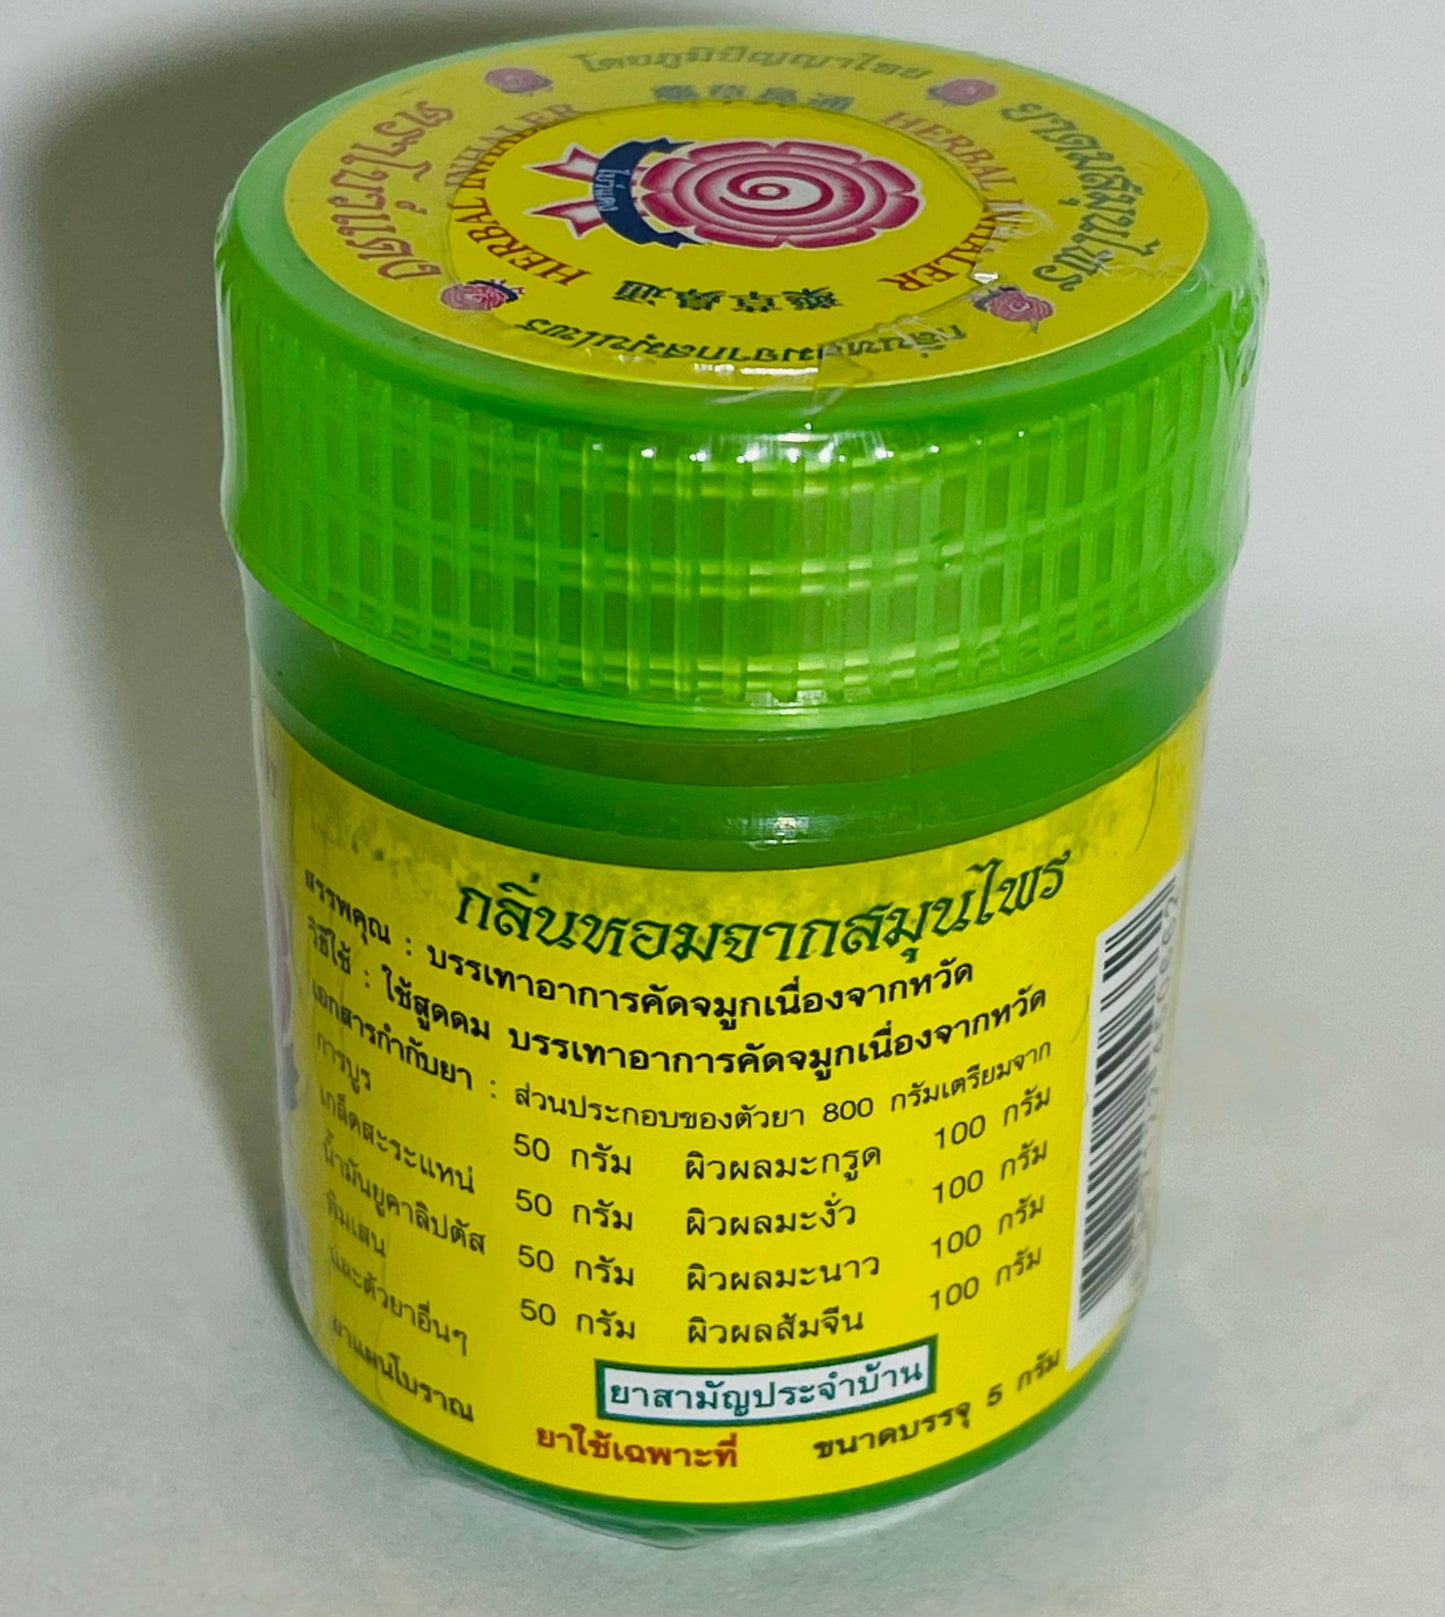 Traditional Thai Herbal Inhalant